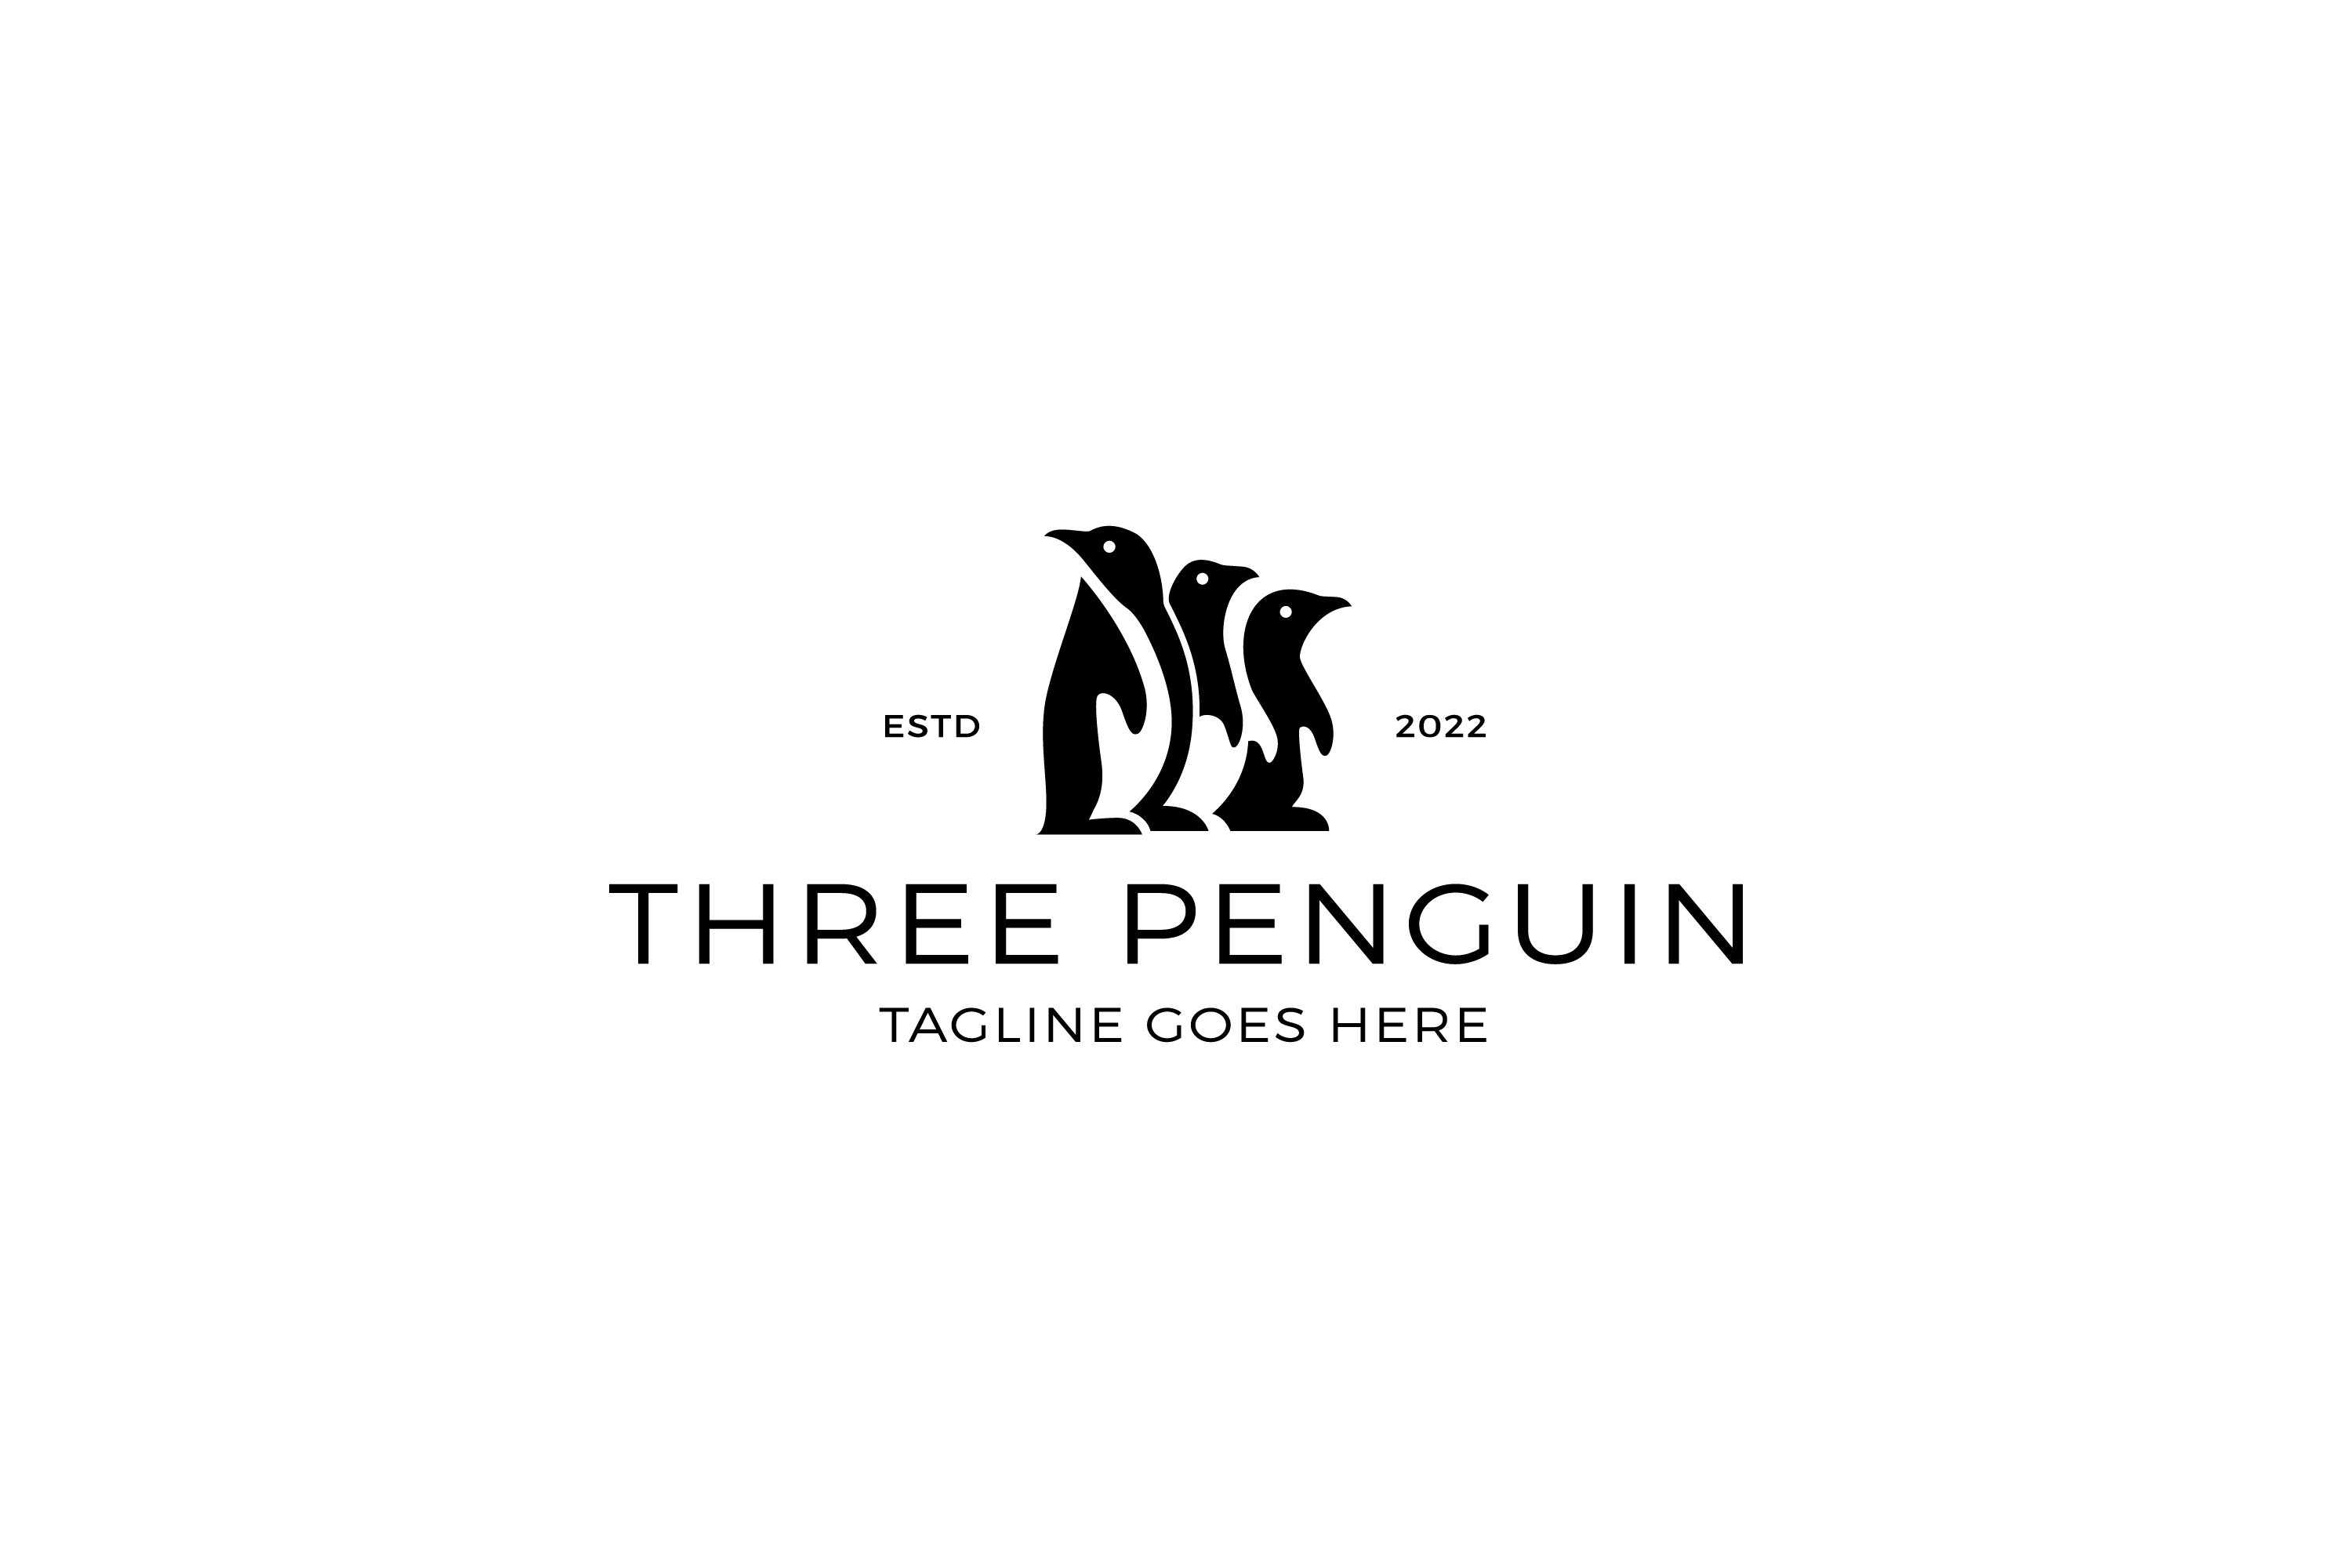 Standing Three Penguin Logo cover image.